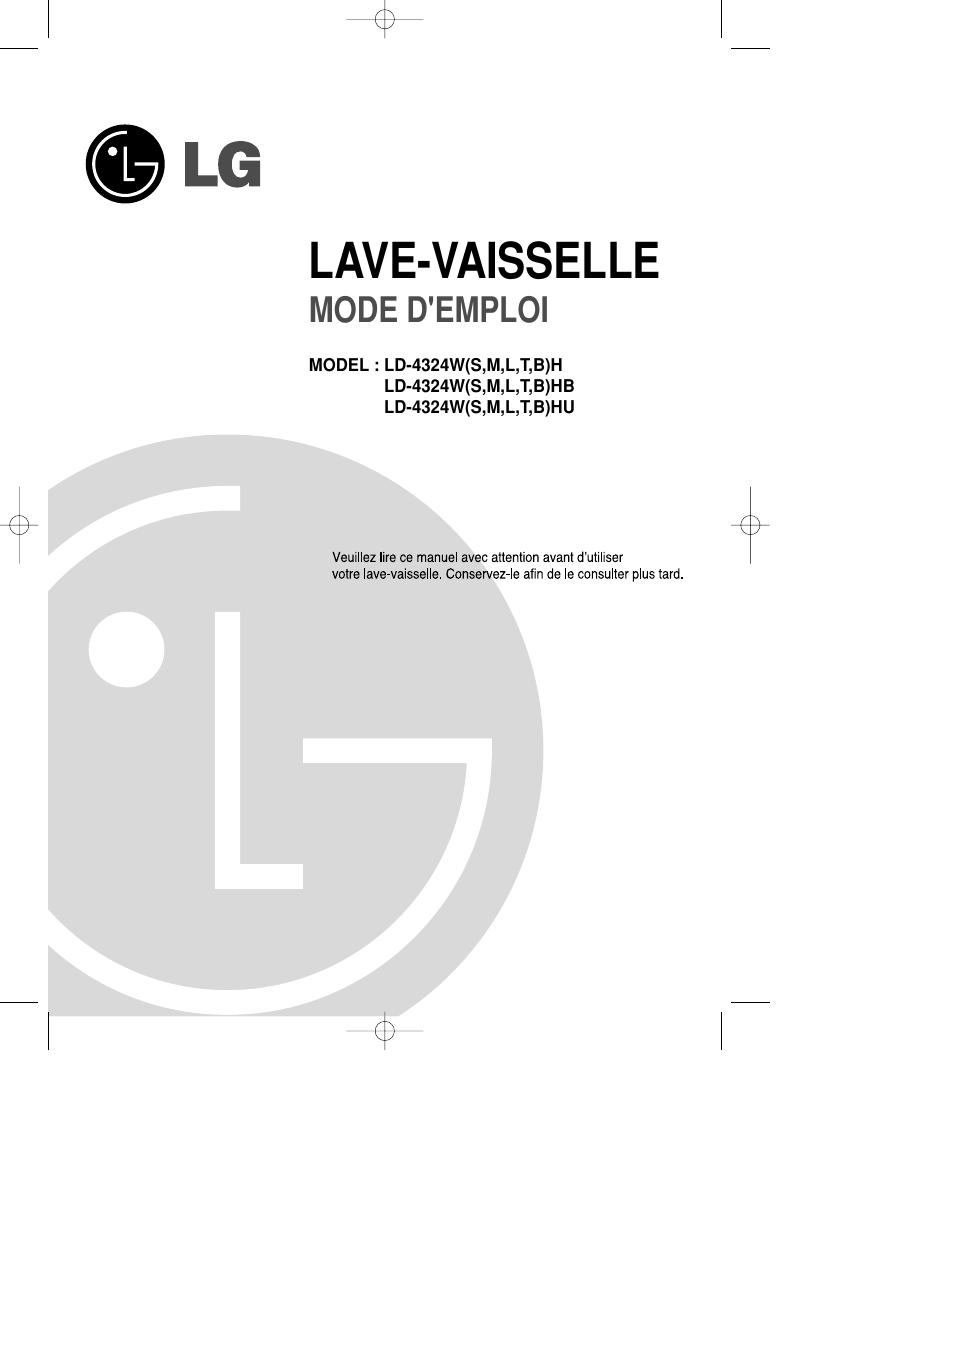 LG LD-4324WH Manuel d'utilisation | Pages: 24